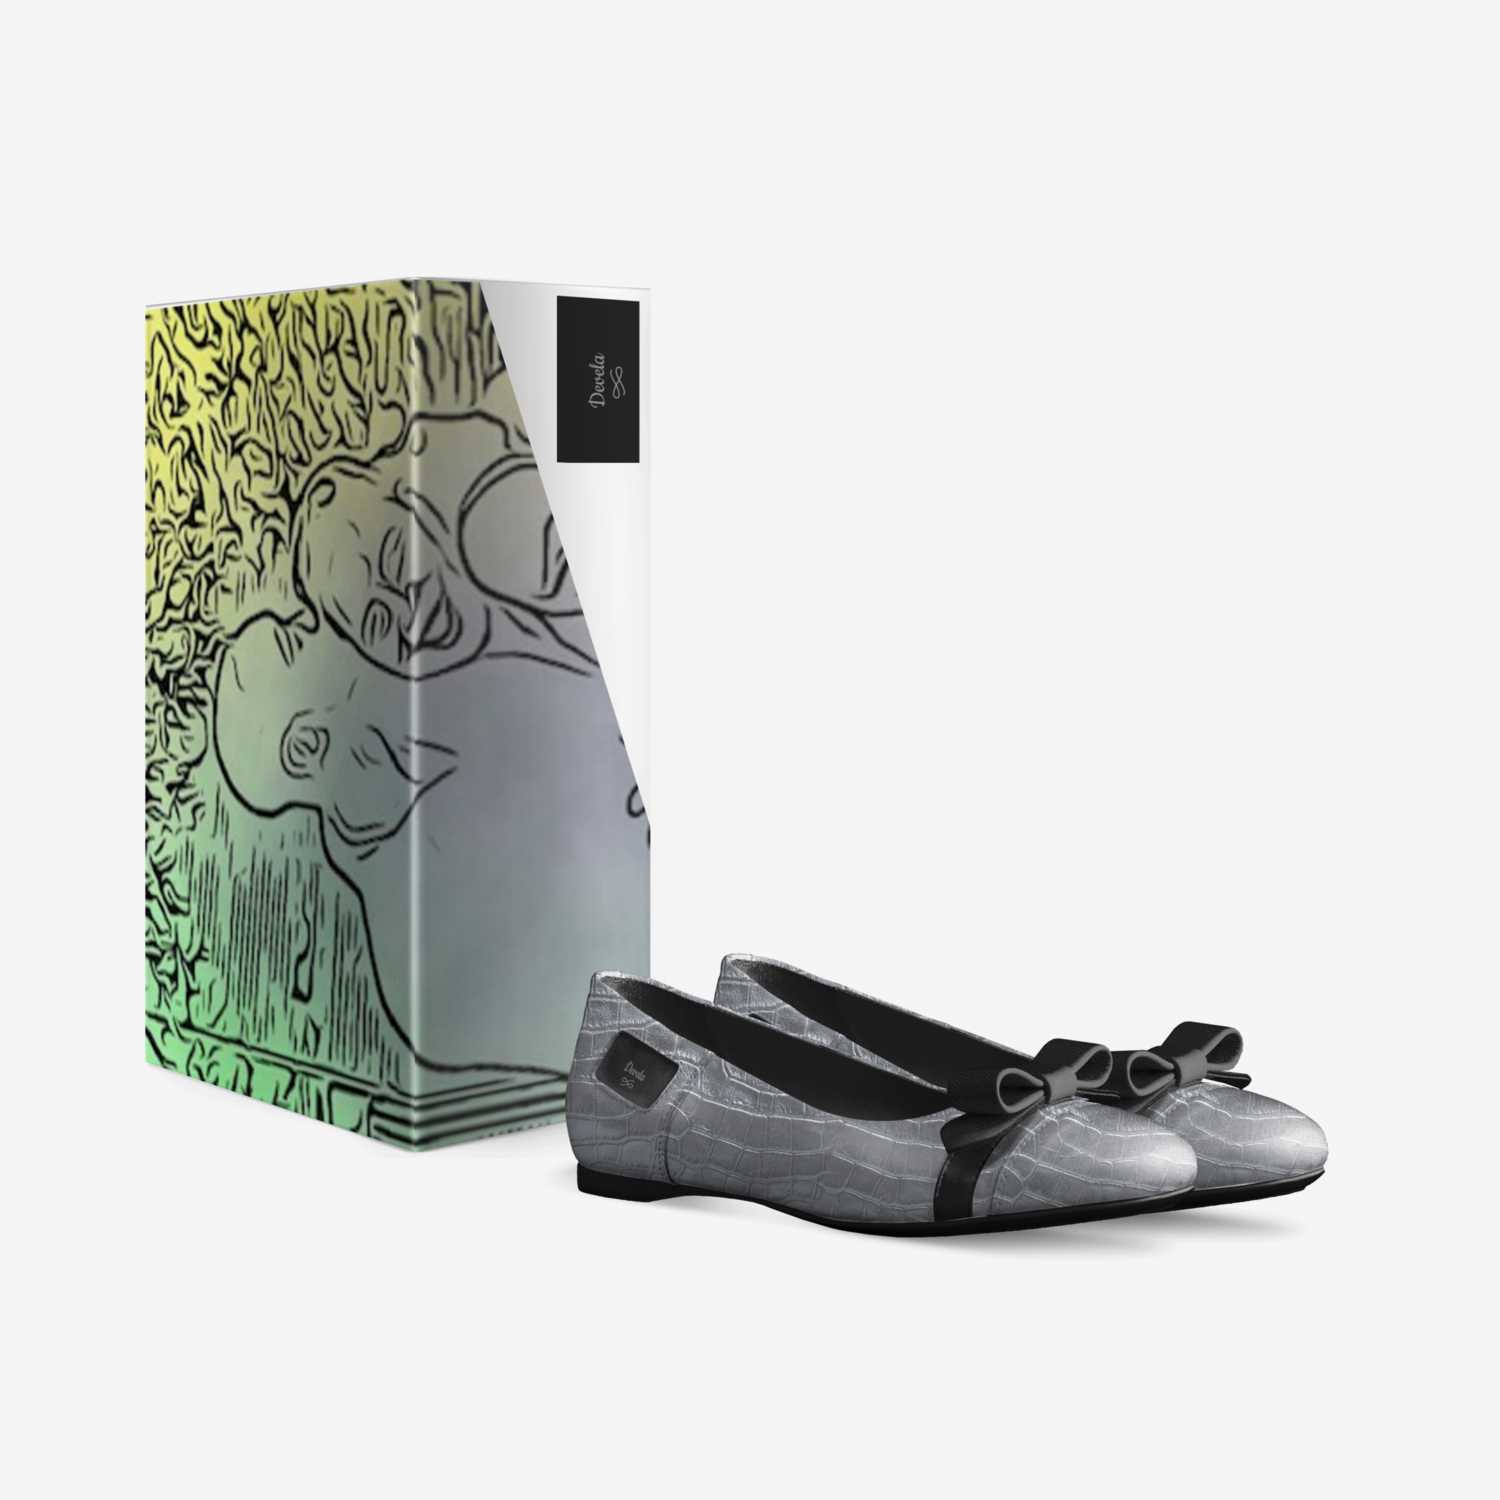 Devela custom made in Italy shoes by Devenus Lashawn | Box view